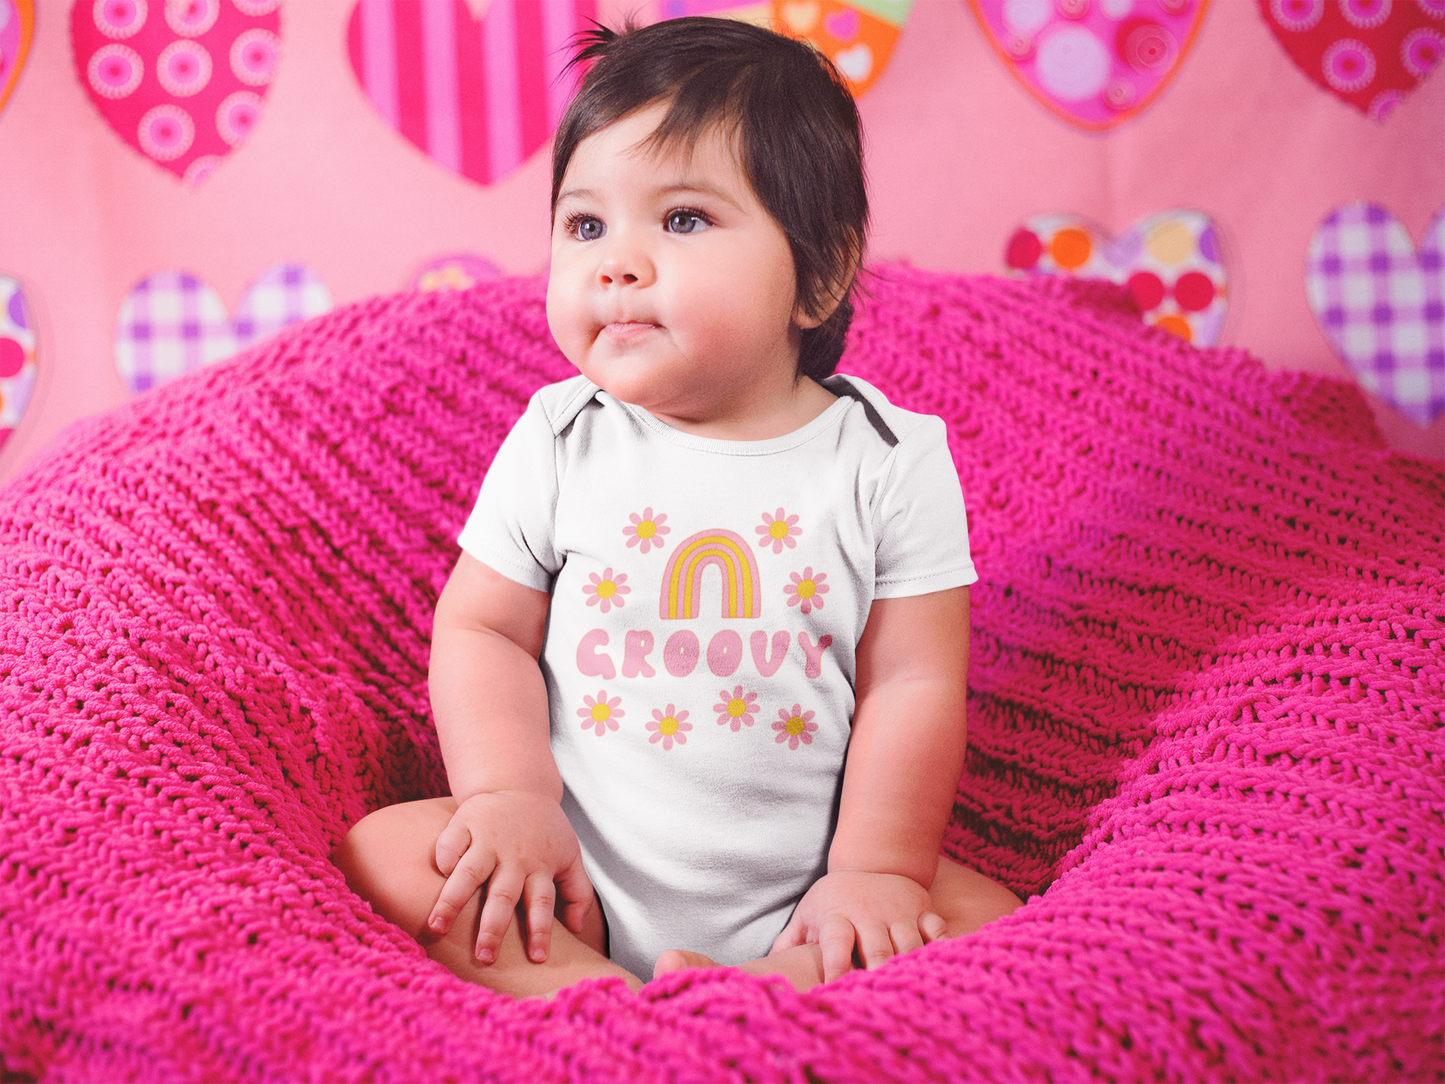 Rainbow Groovy Baby Onesie® Kids Shirt